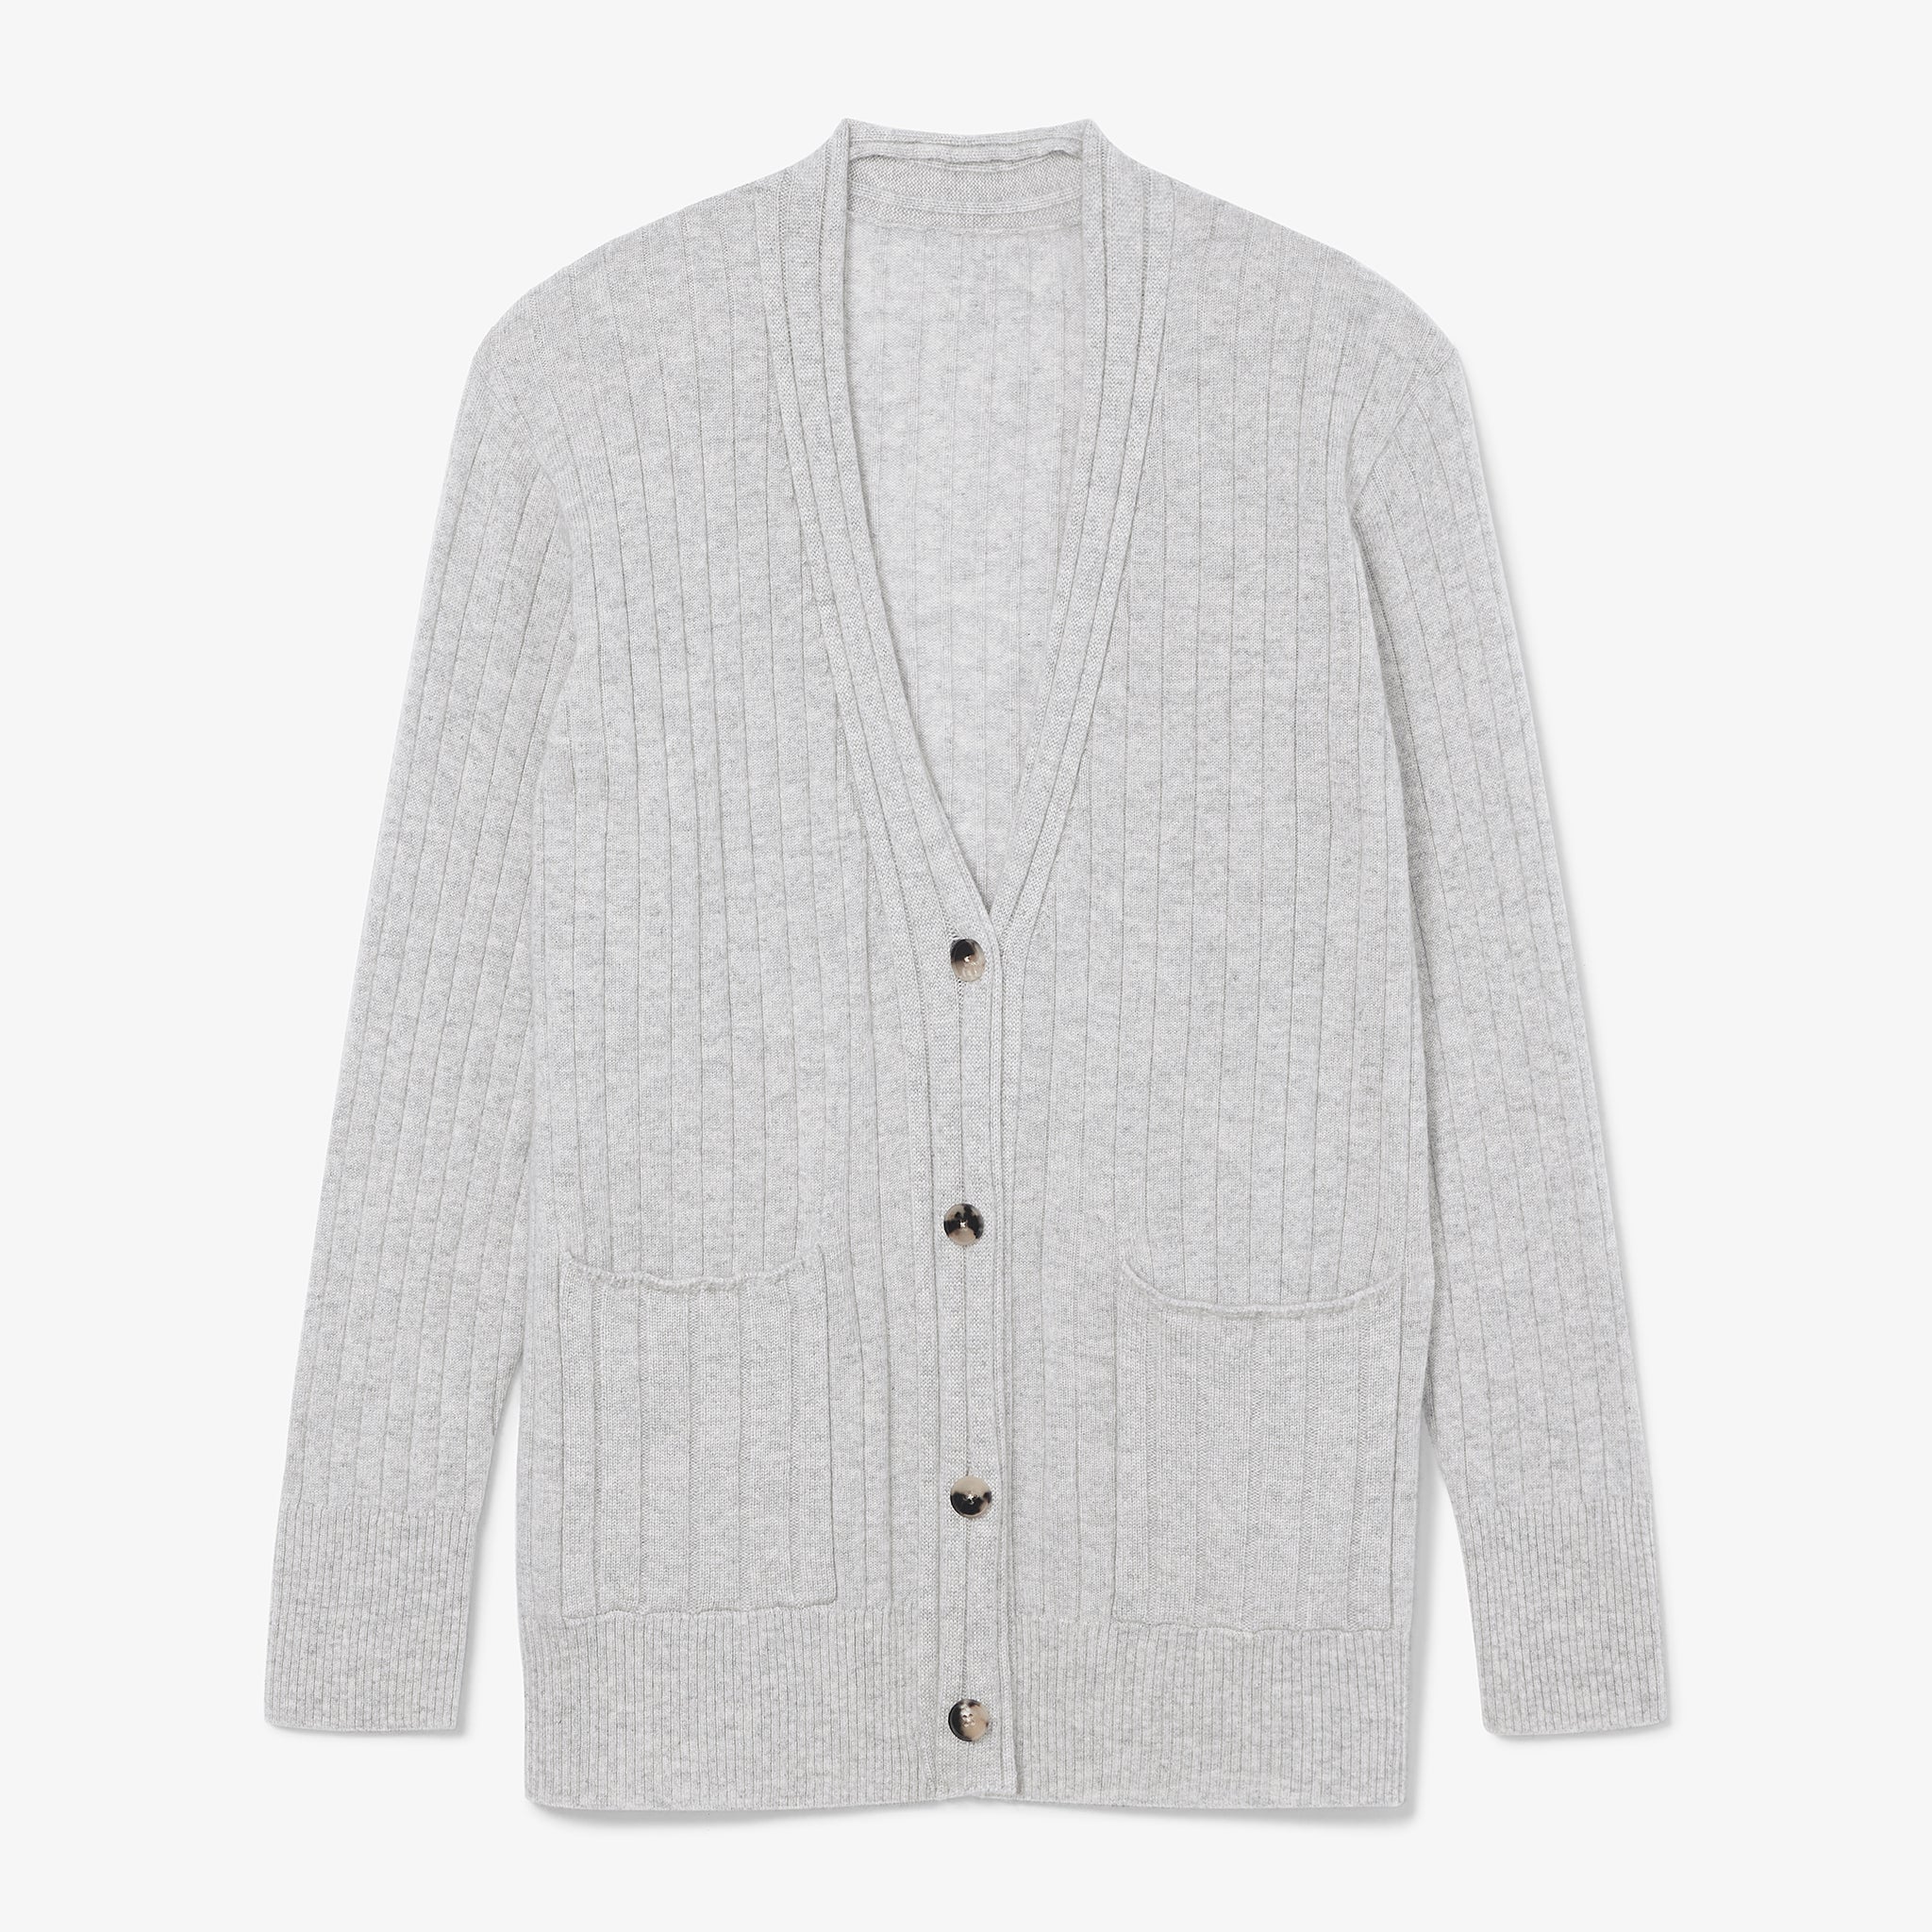 Packshot image of the caro sweater in light heather gray